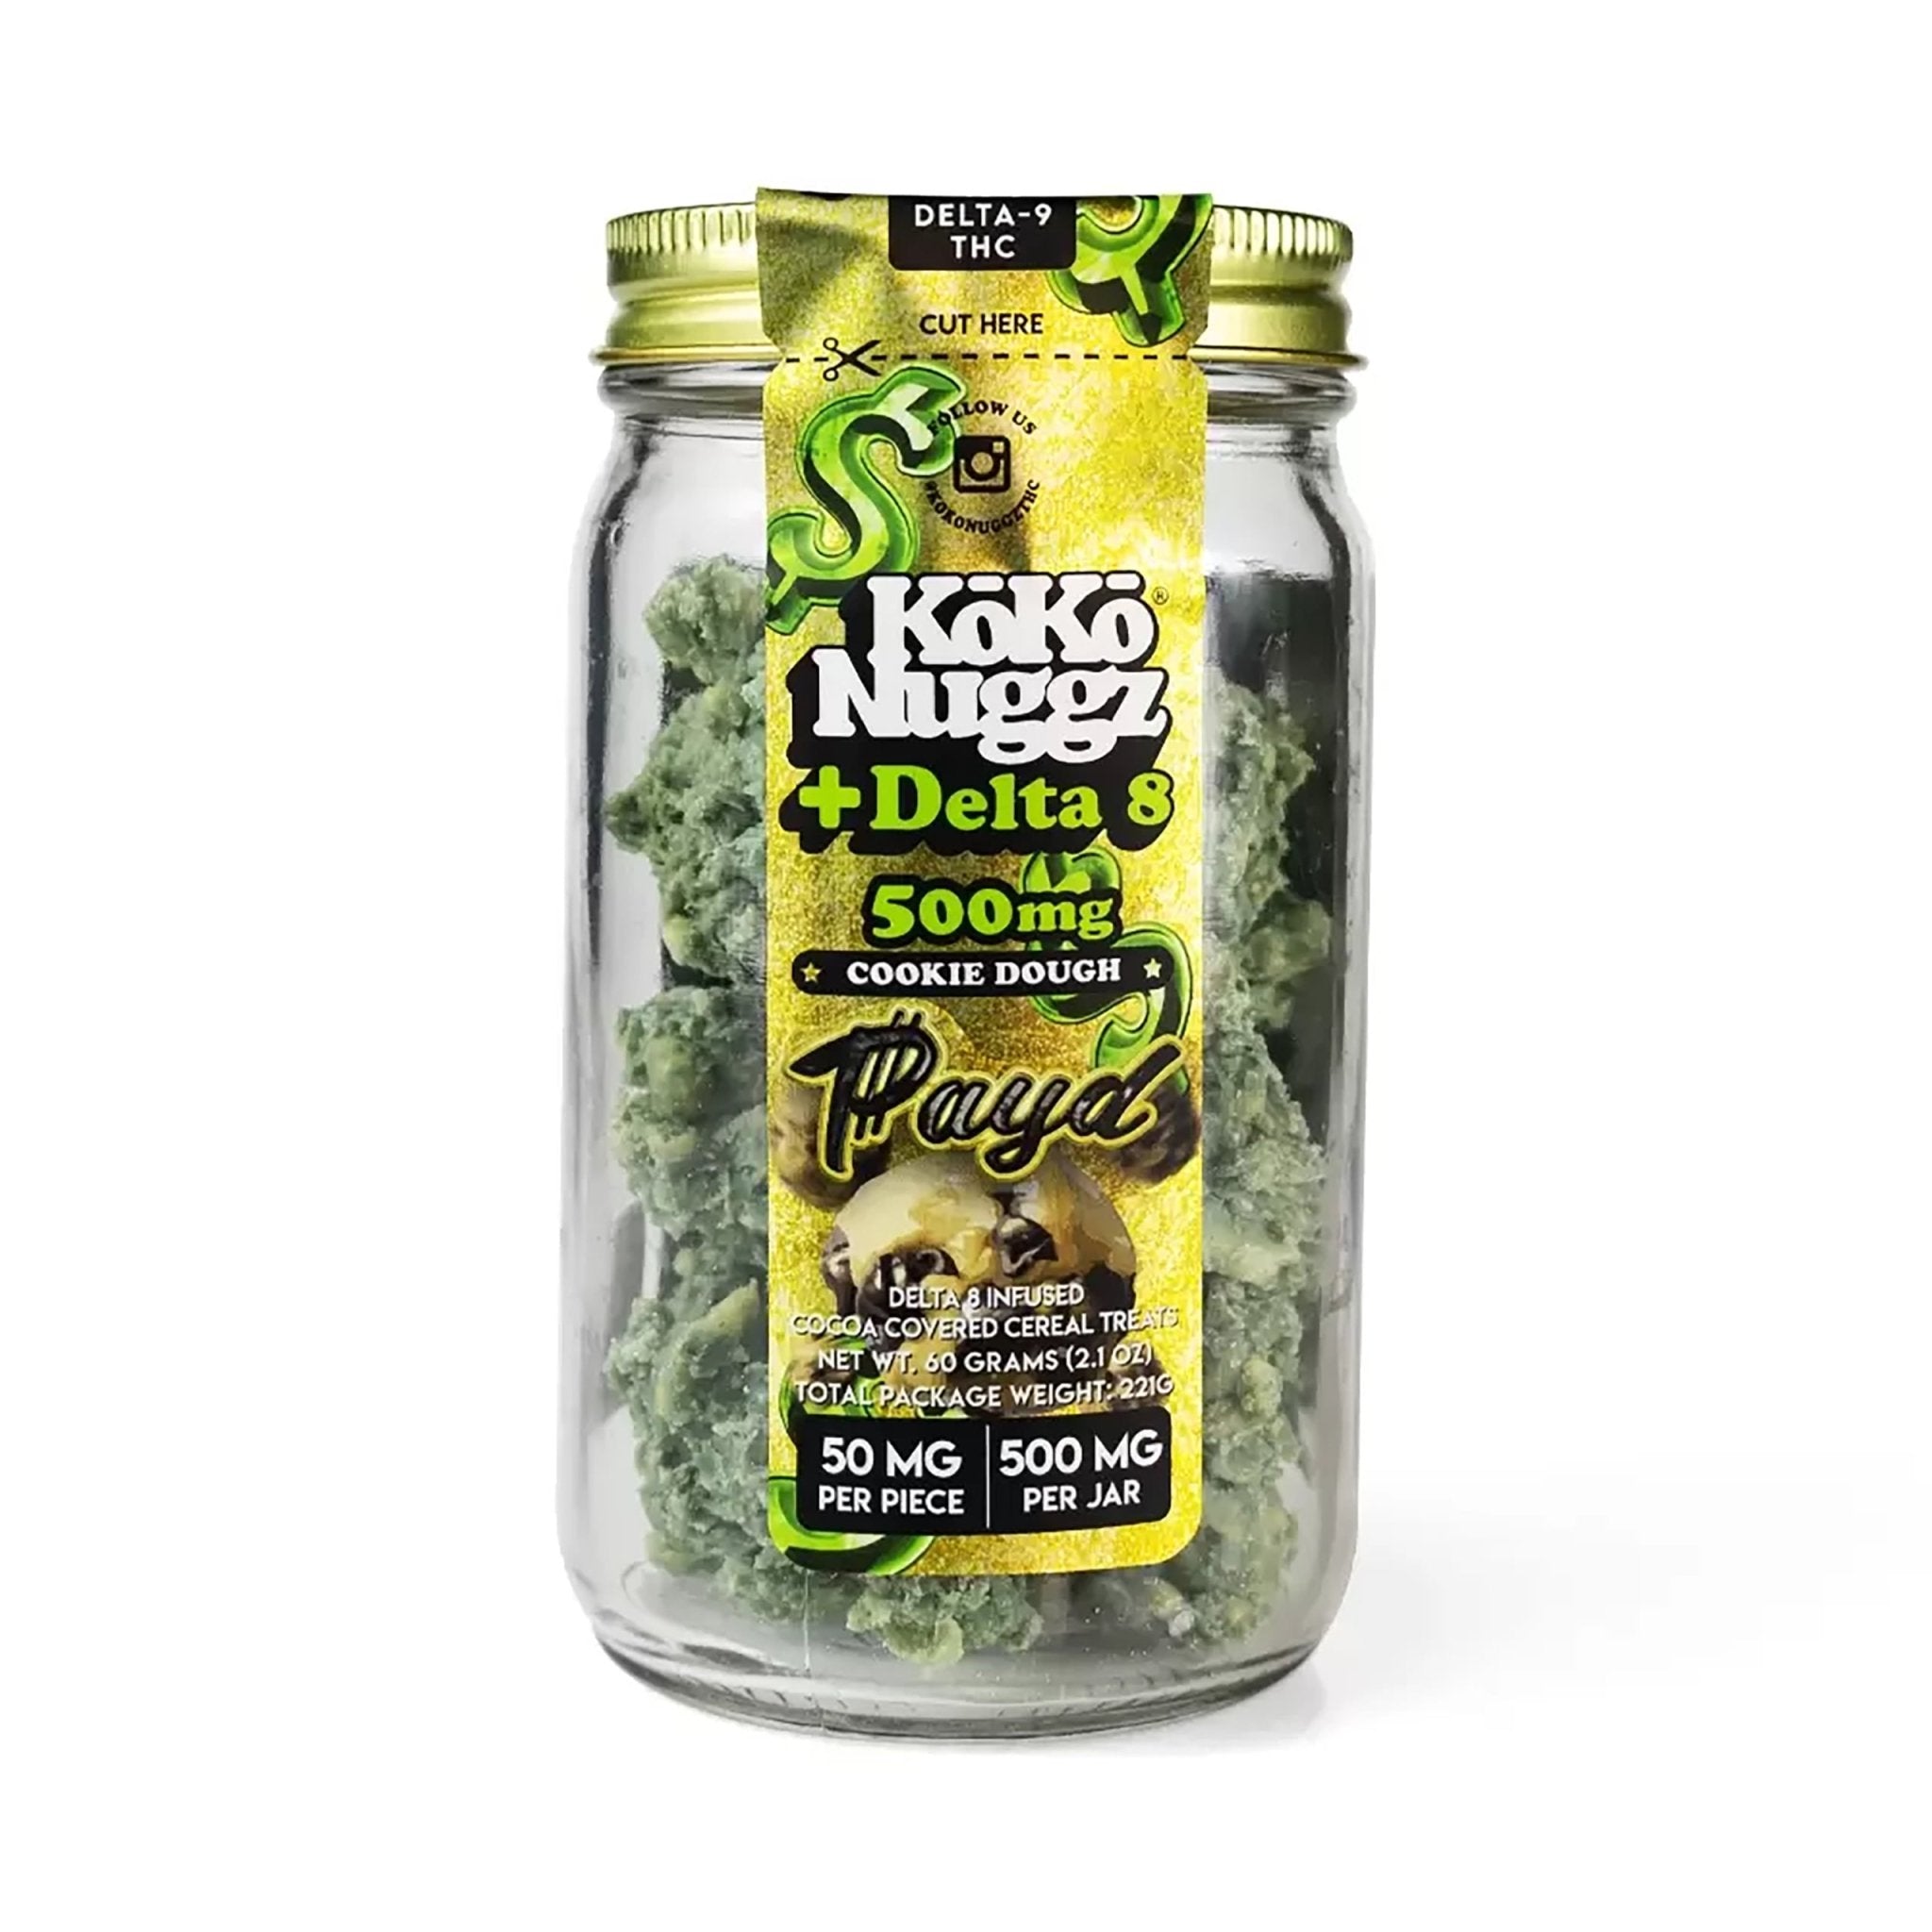 Koko Nuggz Delta 8 THC Cereal Treats by urb - Naturally Mignon CBD